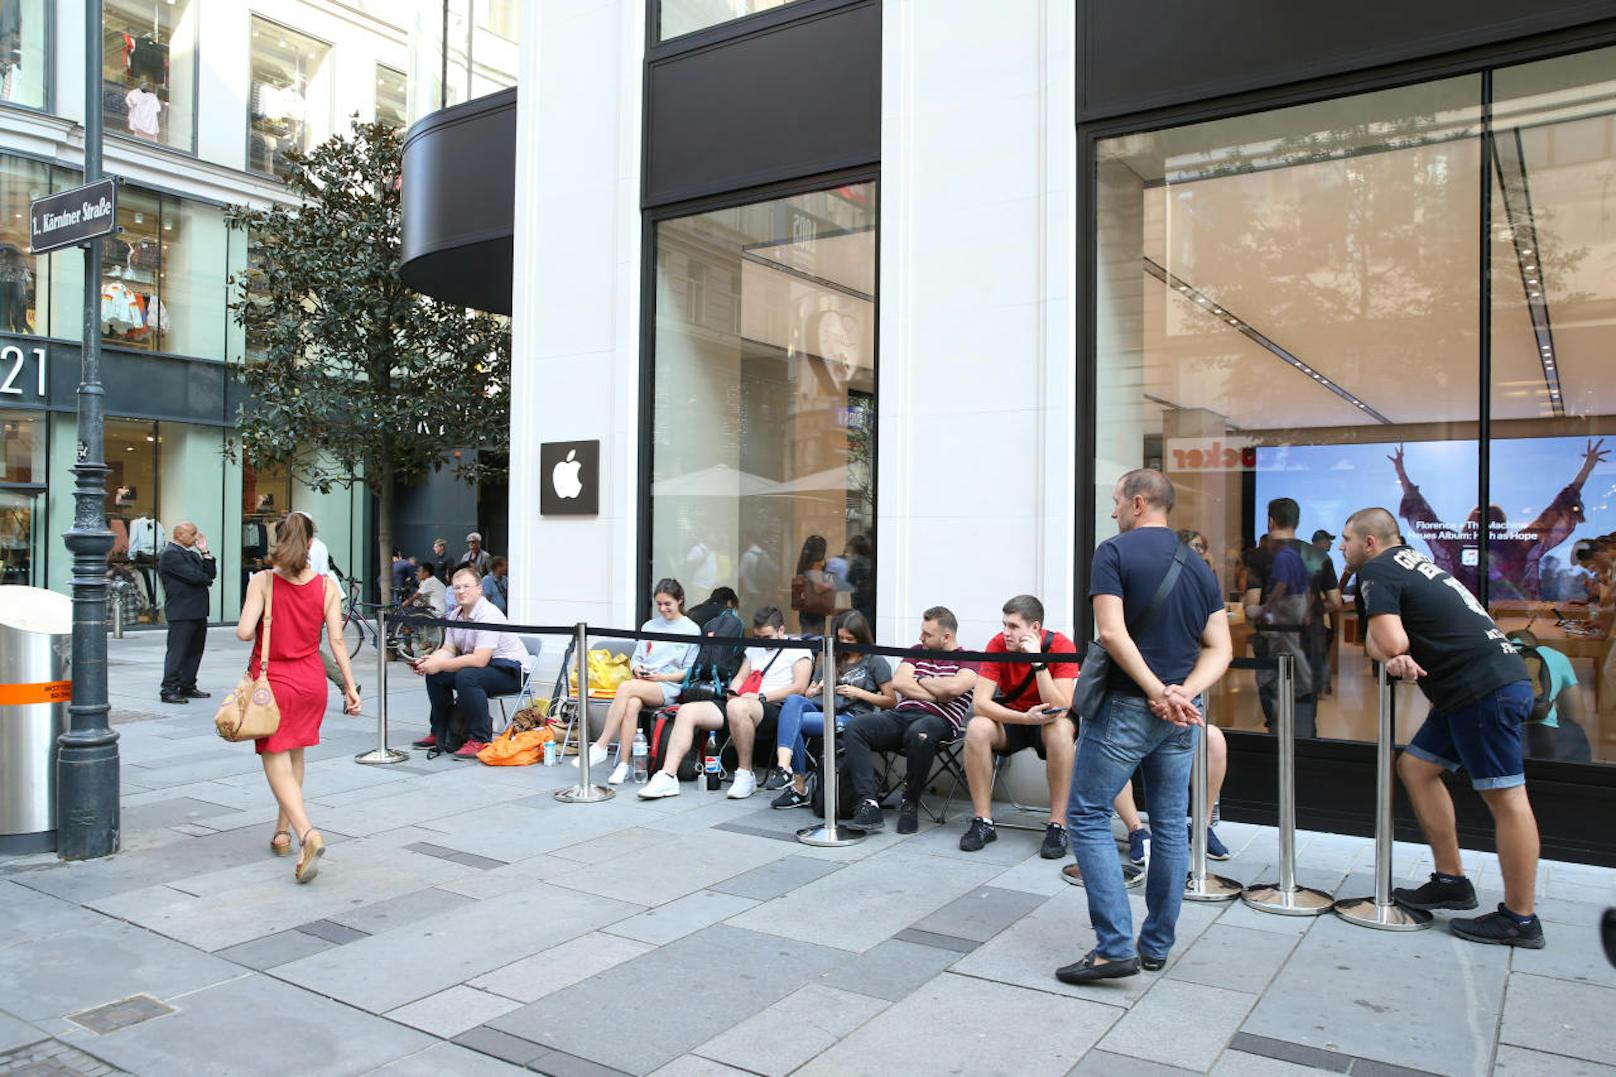 Schon am Donnerstag kampierten mehrere besonders treue iPhone-Fans vor der Apple-Filiale in Wien. 